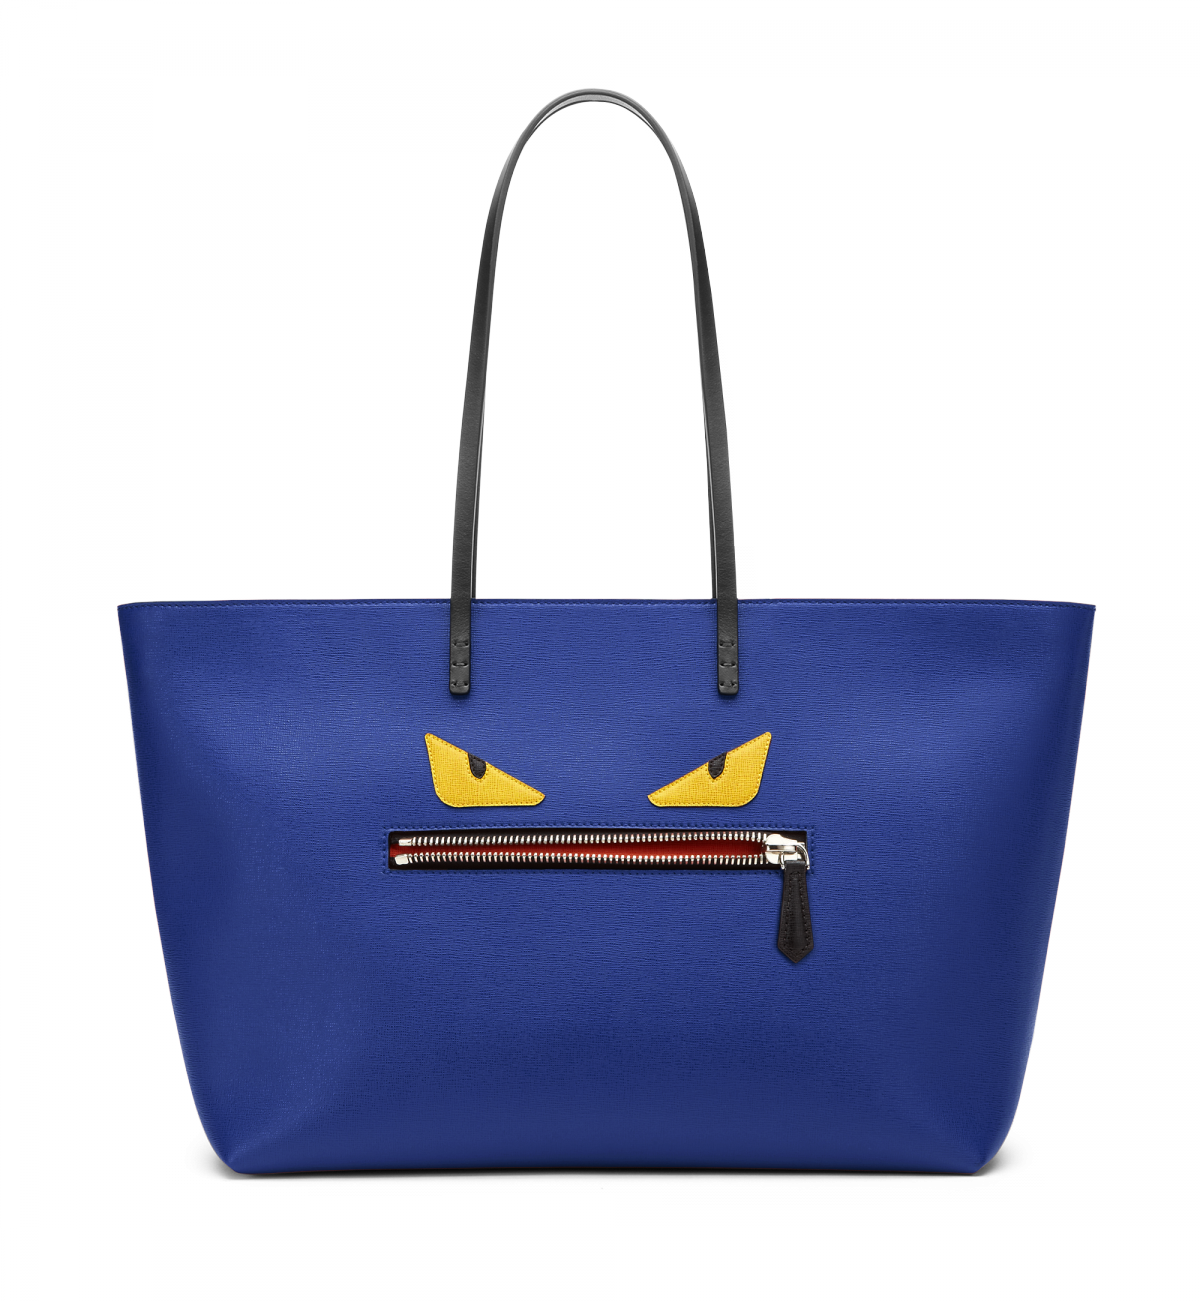 Neo LUXuries: FENDI Bag Bugs Roll Bag / Shopper - 8BH185